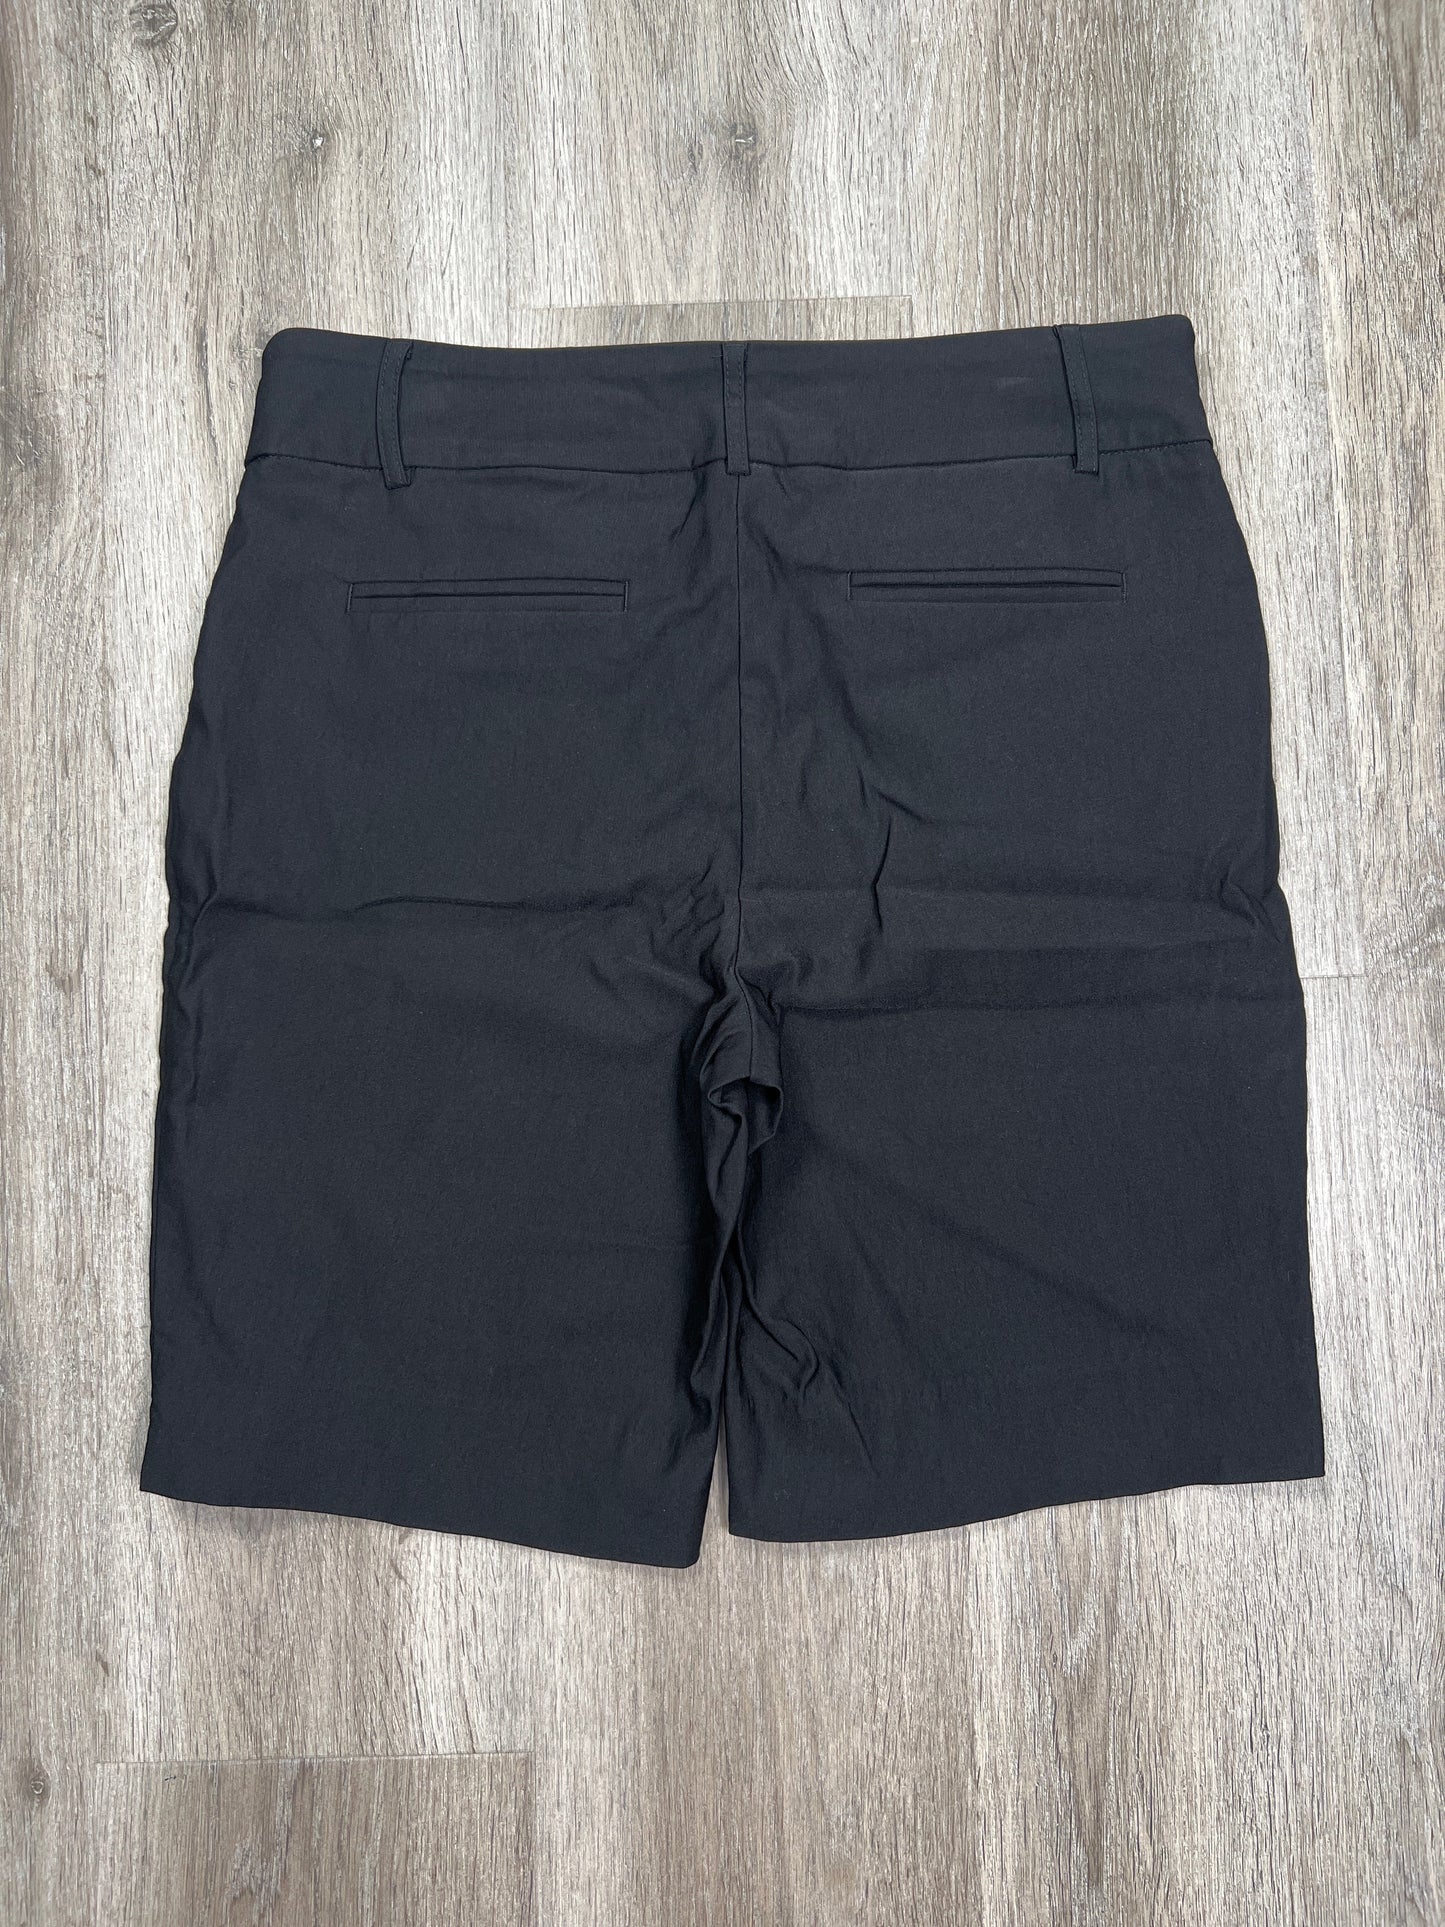 Black Shorts Hilary Radley, Size M